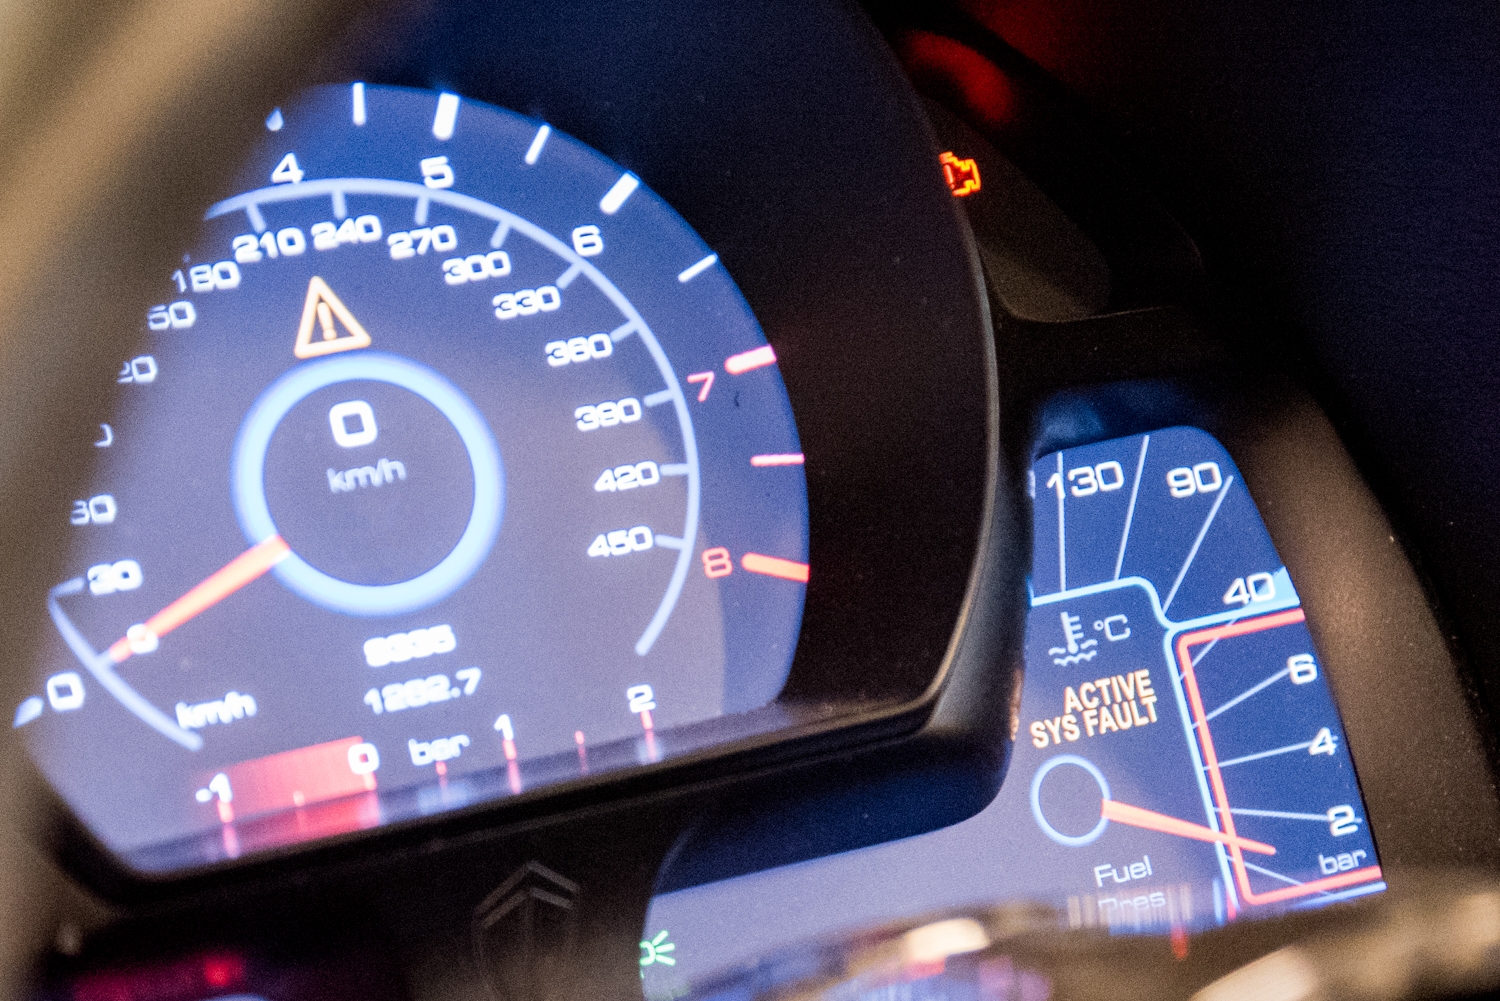 Koenigsegg_One 1_ABS_fault